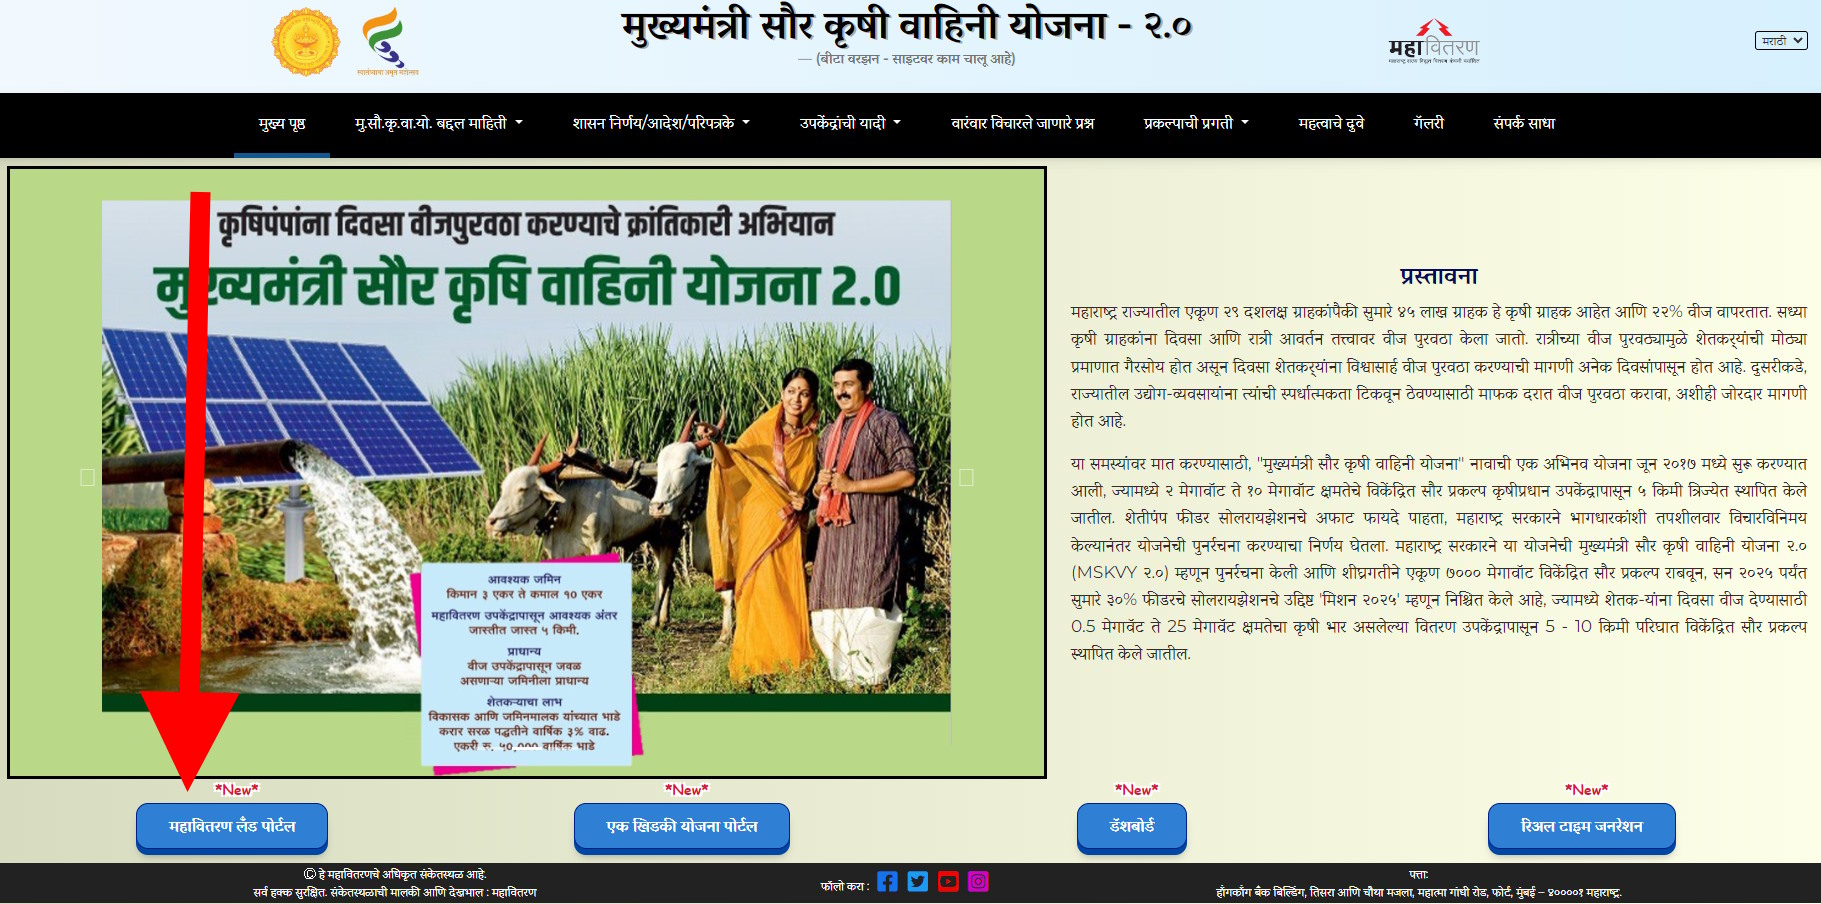 Saur Krishi Vahini scheme website homepage